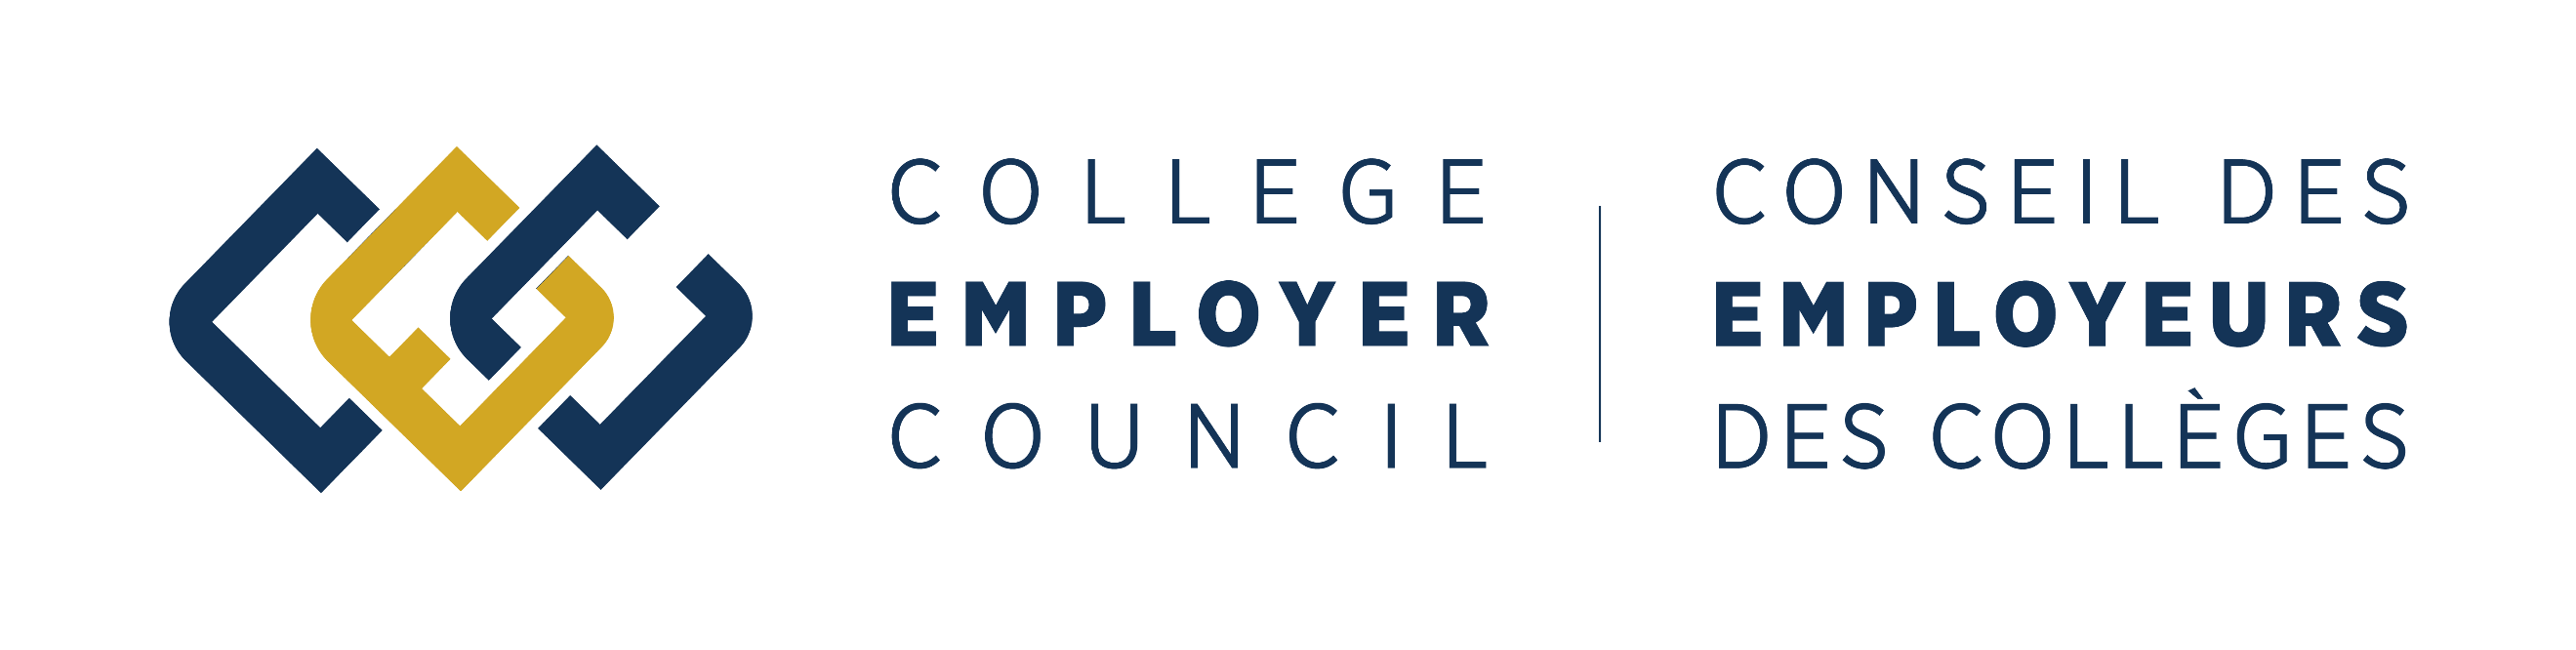 College Employment Council